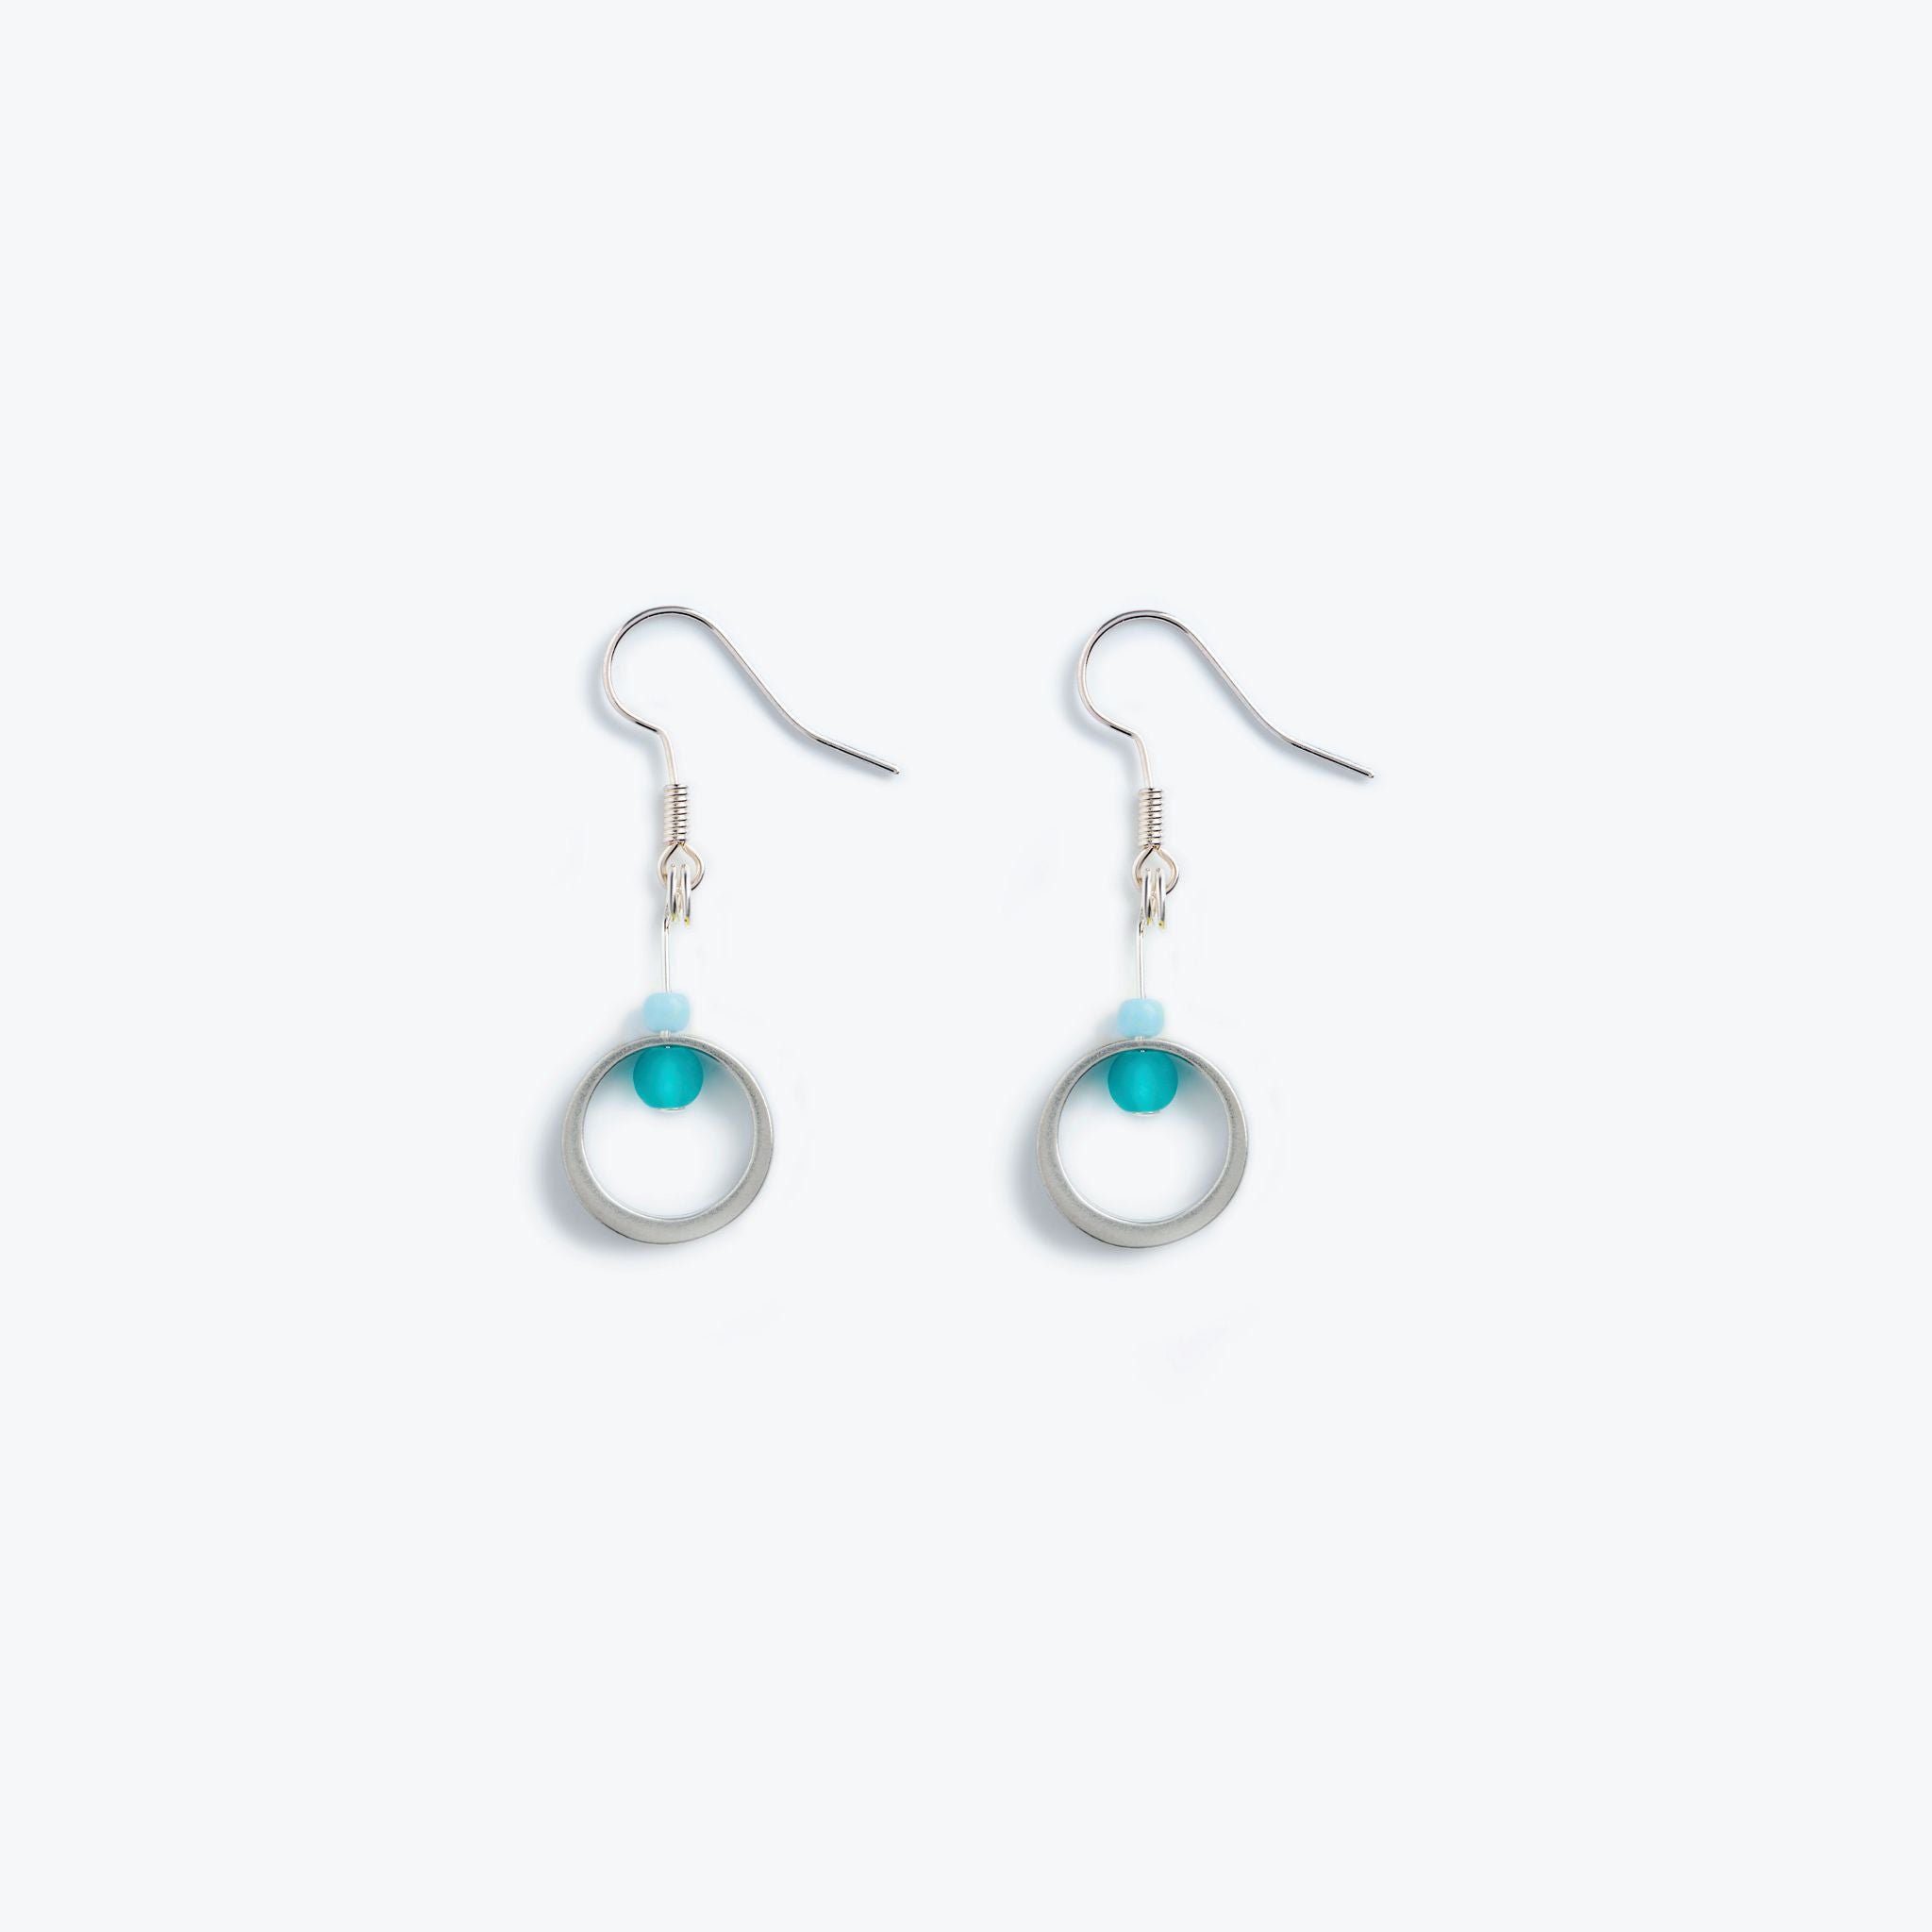 Ocea drop earrings in turquoise & sustainable pewter